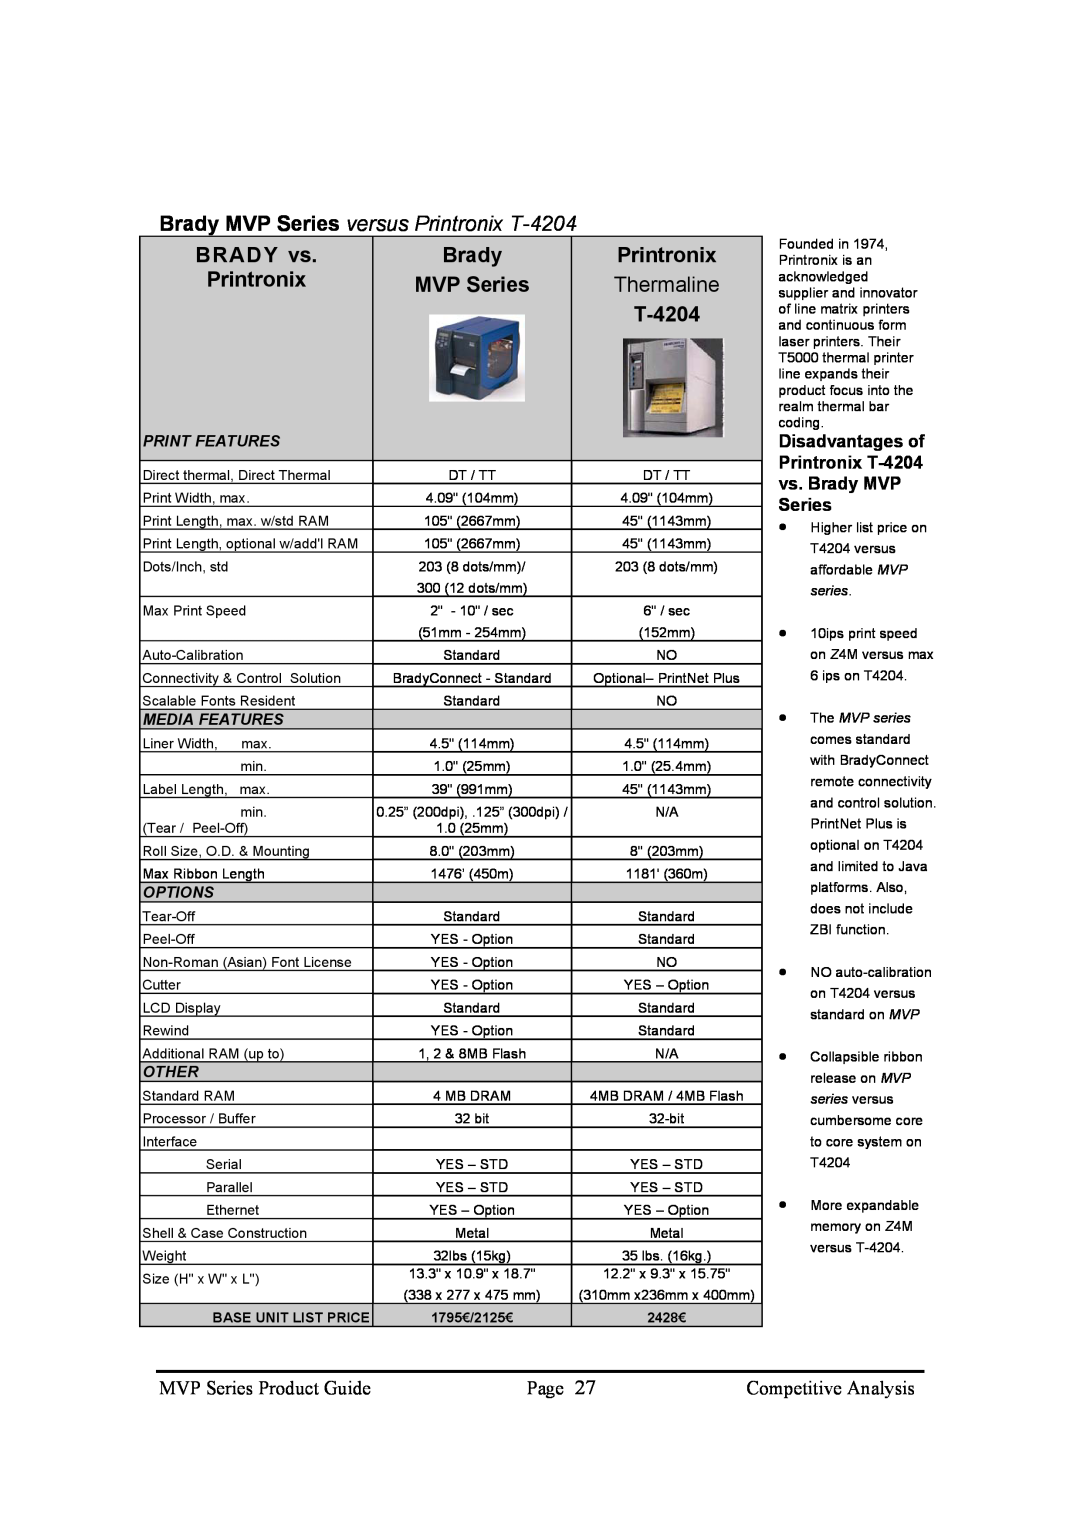 Brady 300MVP Brady MVP Series versus Printronix T-4204, MVP Series Product Guide, Page, Competitive Analysis, Options 